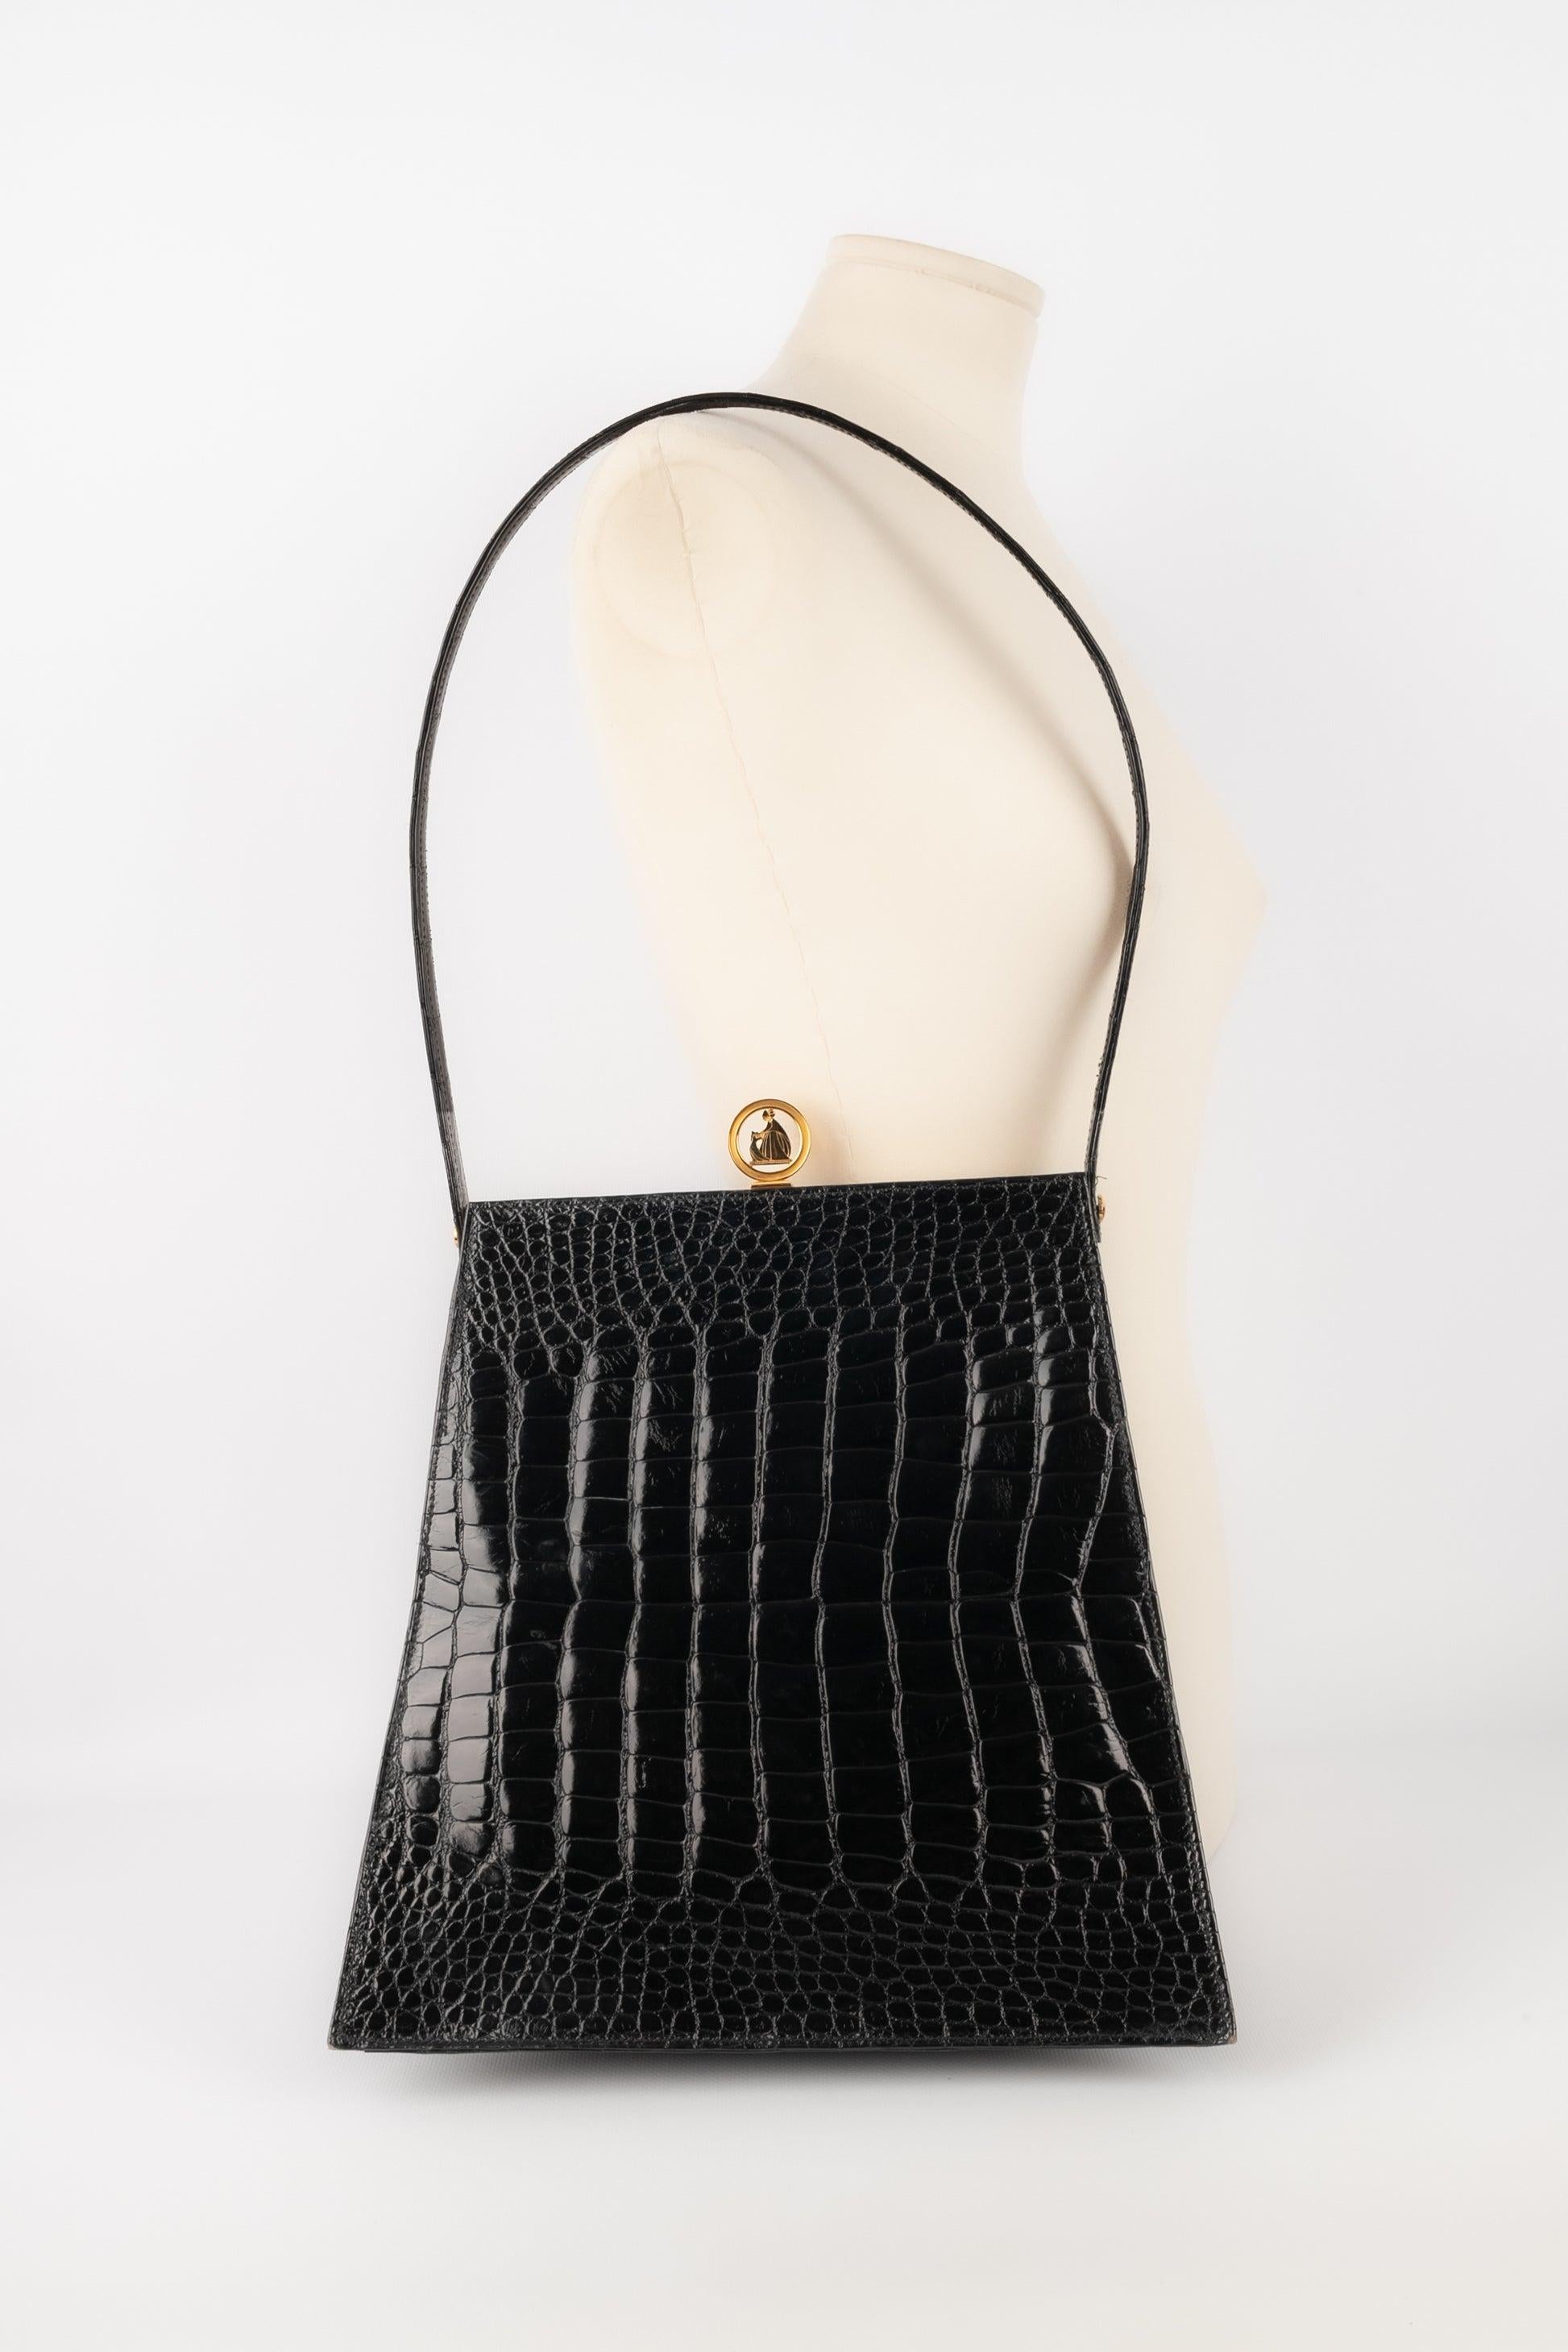 Lanvin Crocodile Black Exotic Leather Bag For Sale 5